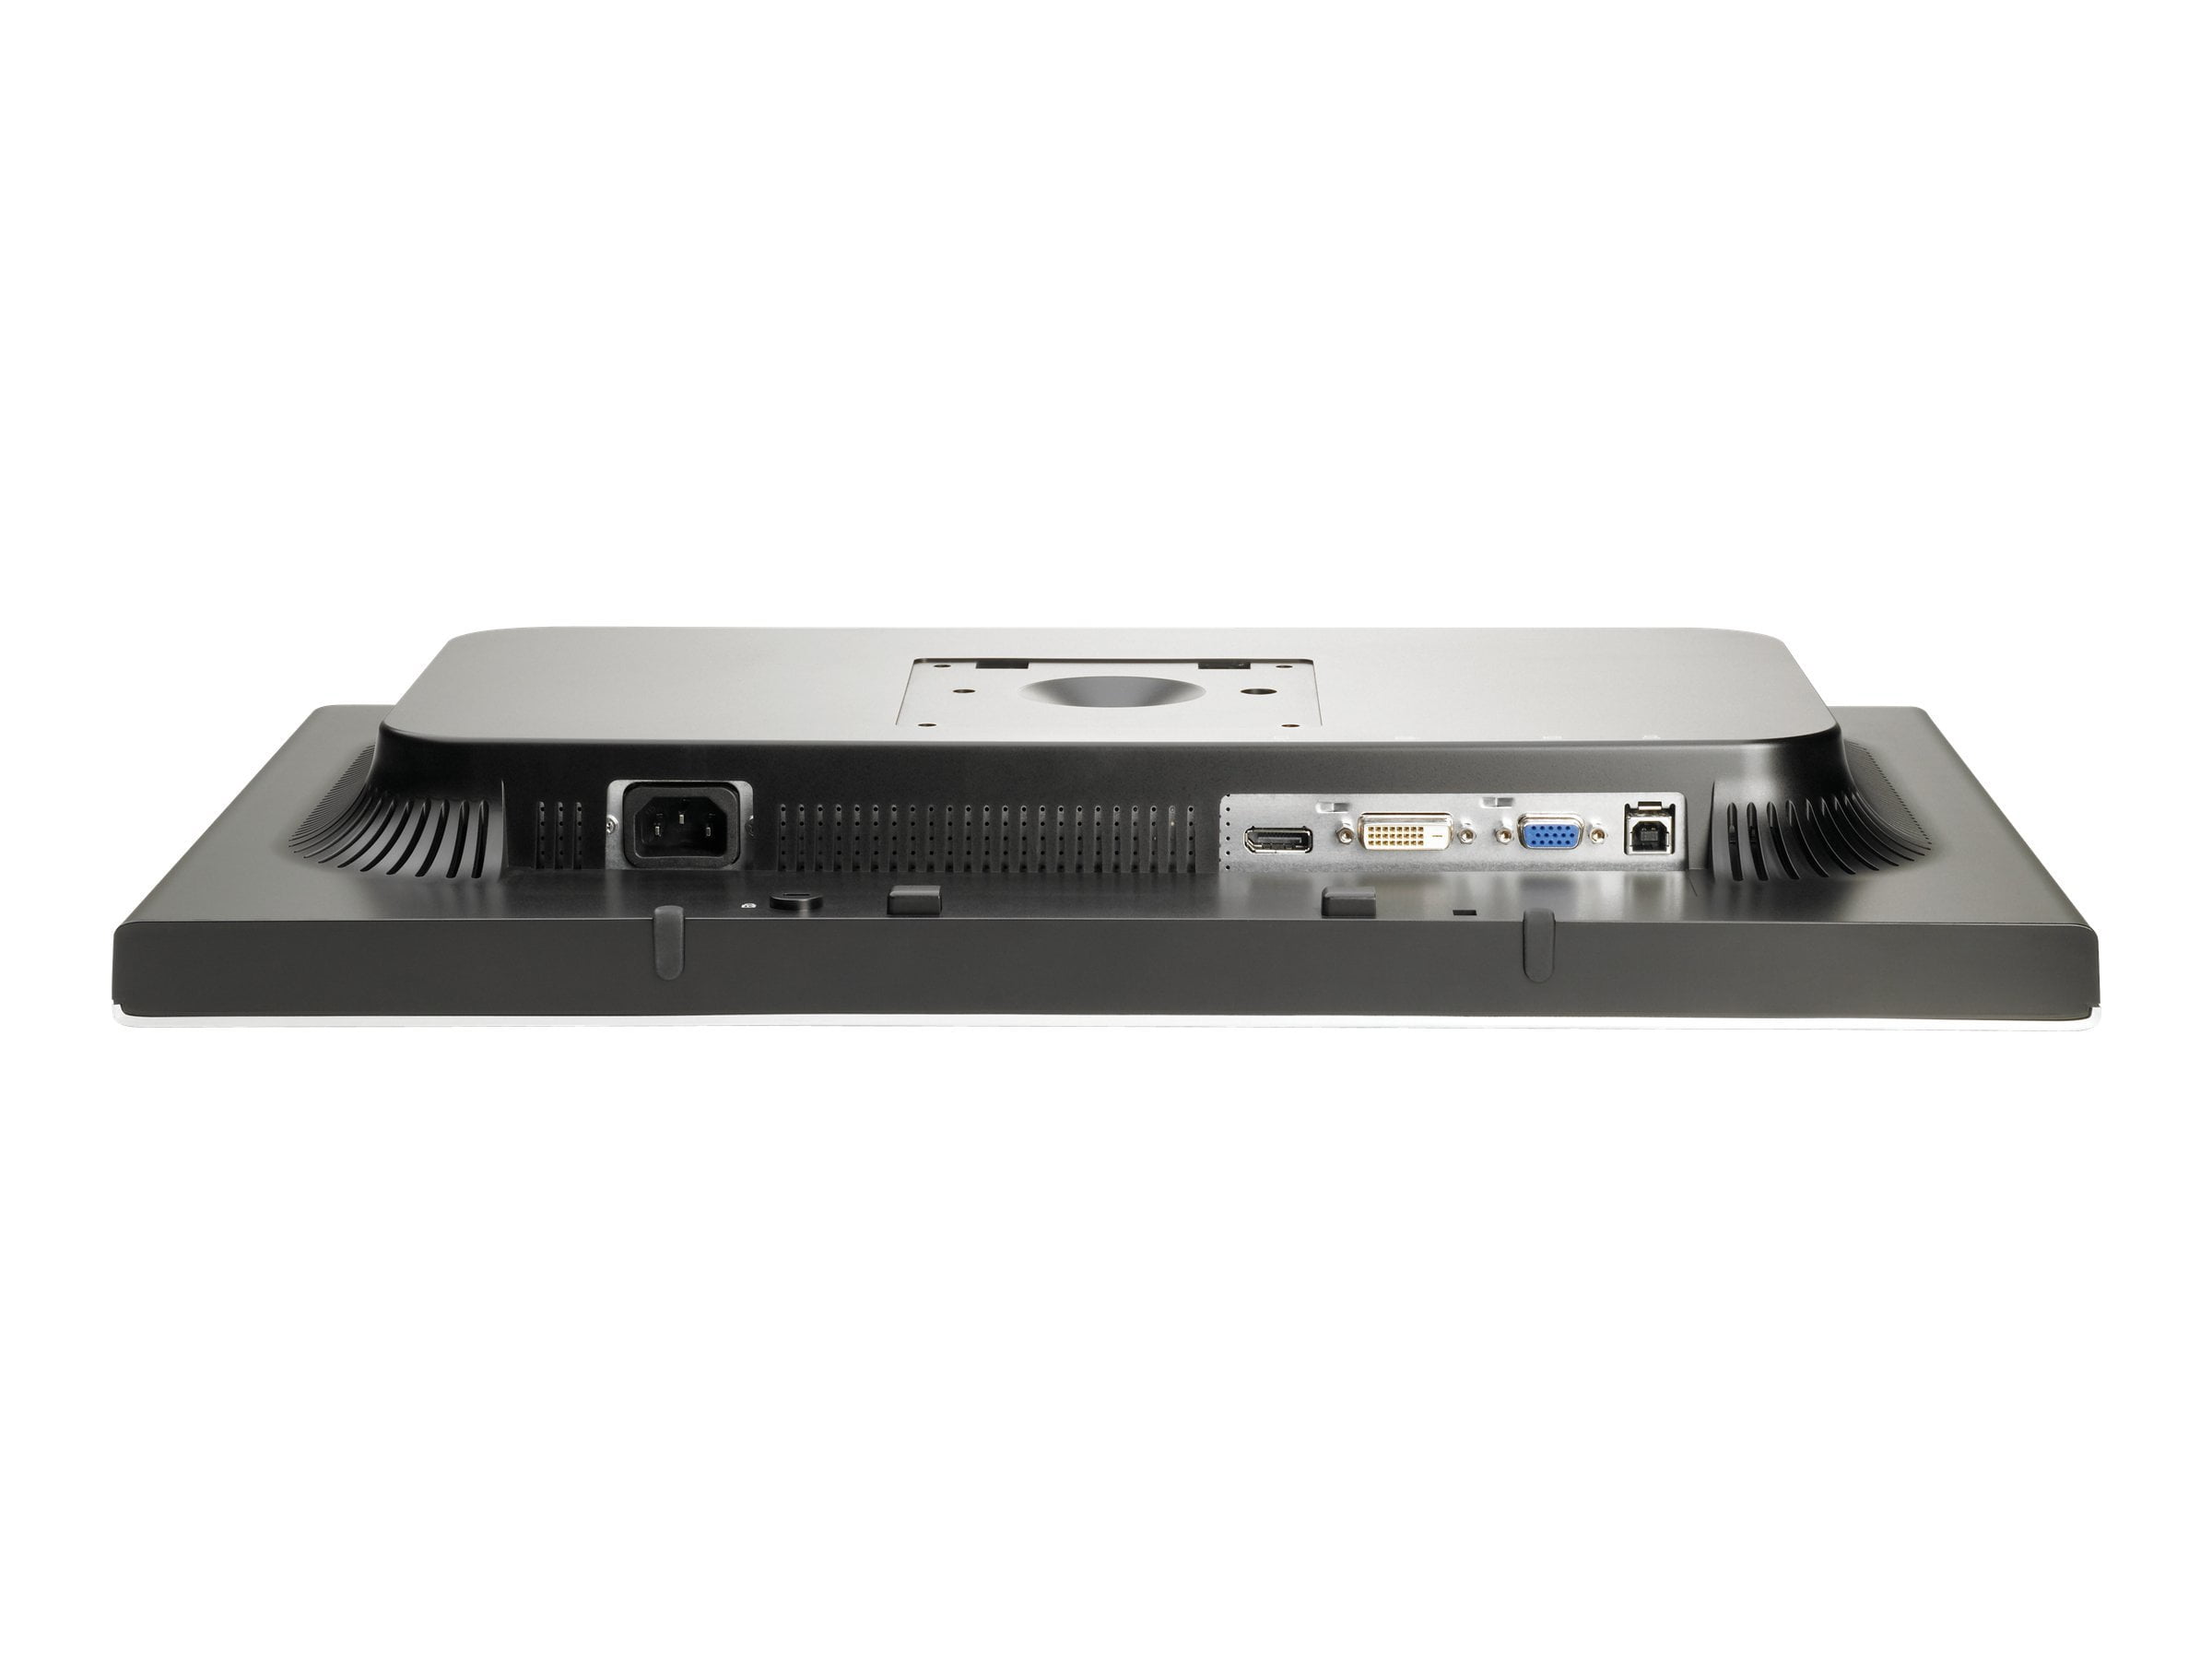 HP Compaq LA2205wg - monitor - 22" (22" viewable) - 1680 x 1050 @ 60 - TN - 250 - 1000:1 - 5 ms - DVI-D, VGA, DisplayPort - black, brushed aluminum - Walmart.com